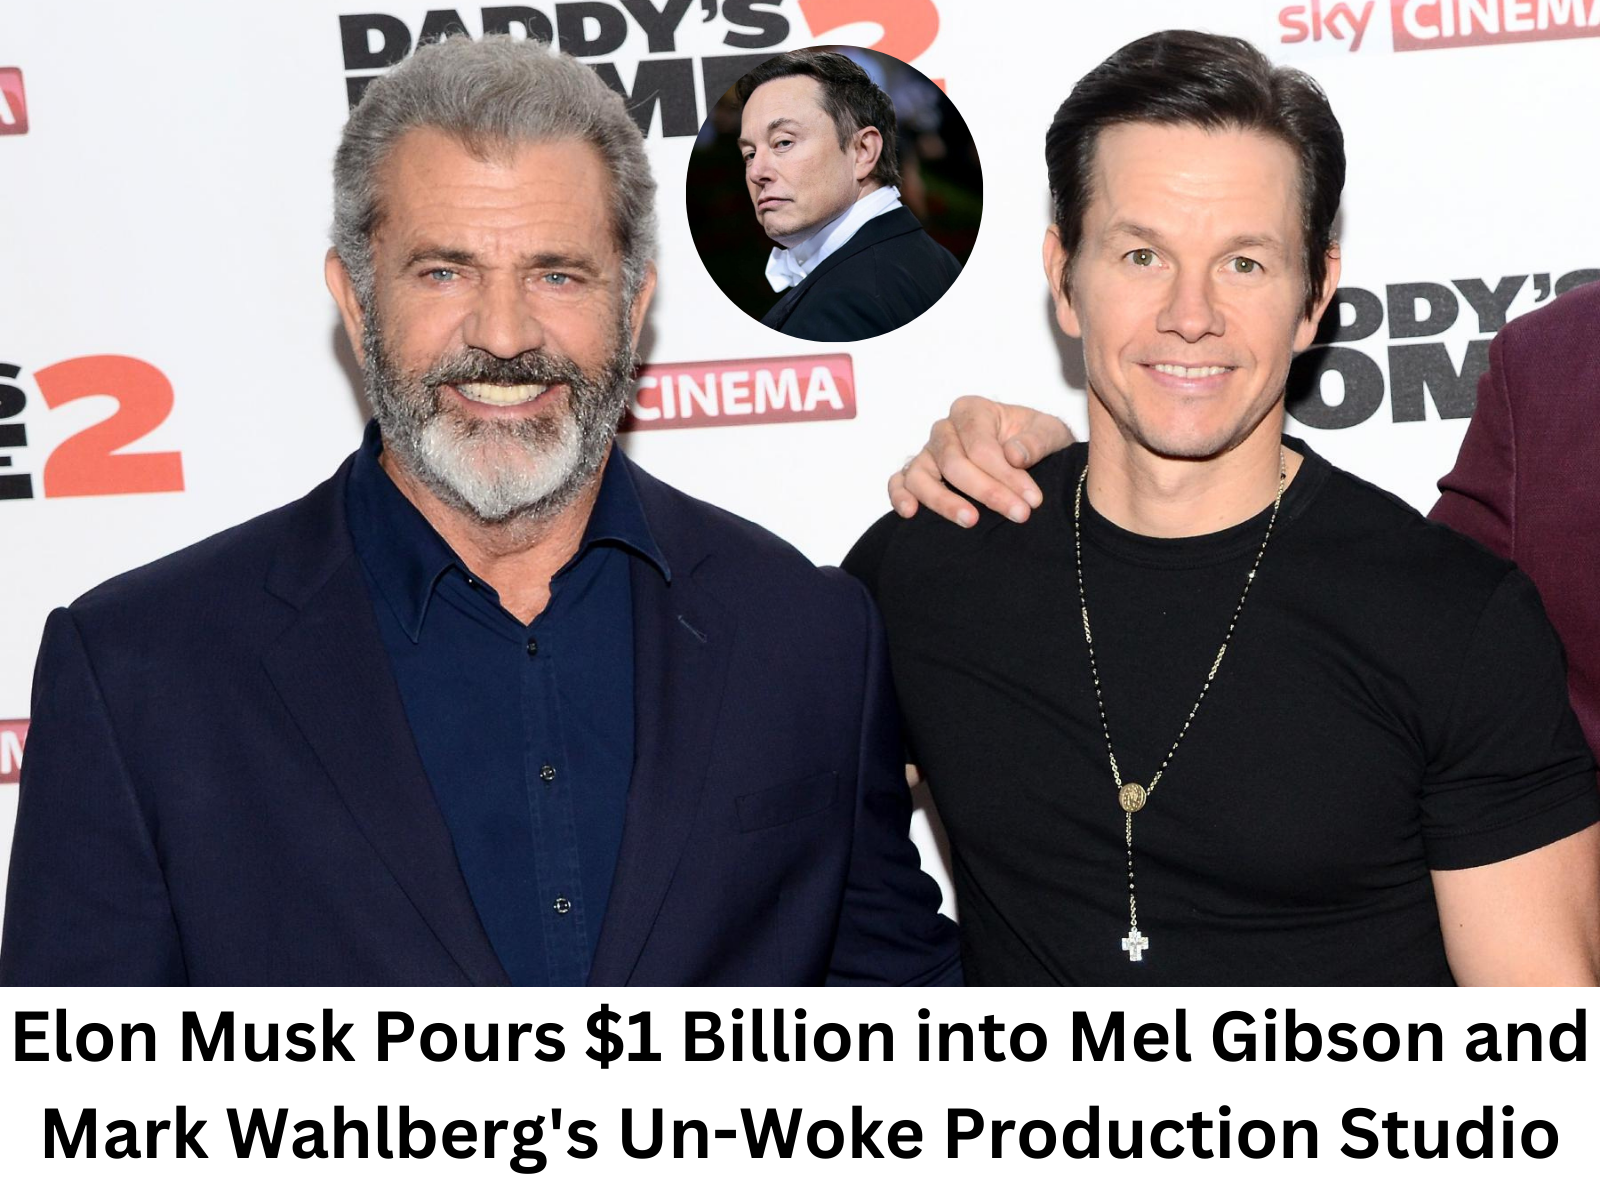 Elon Musk’s Billion-Dollar Bet: Backing Mel Gibson and Mark Wahlberg’s Un-Woke Hollywood Revolution